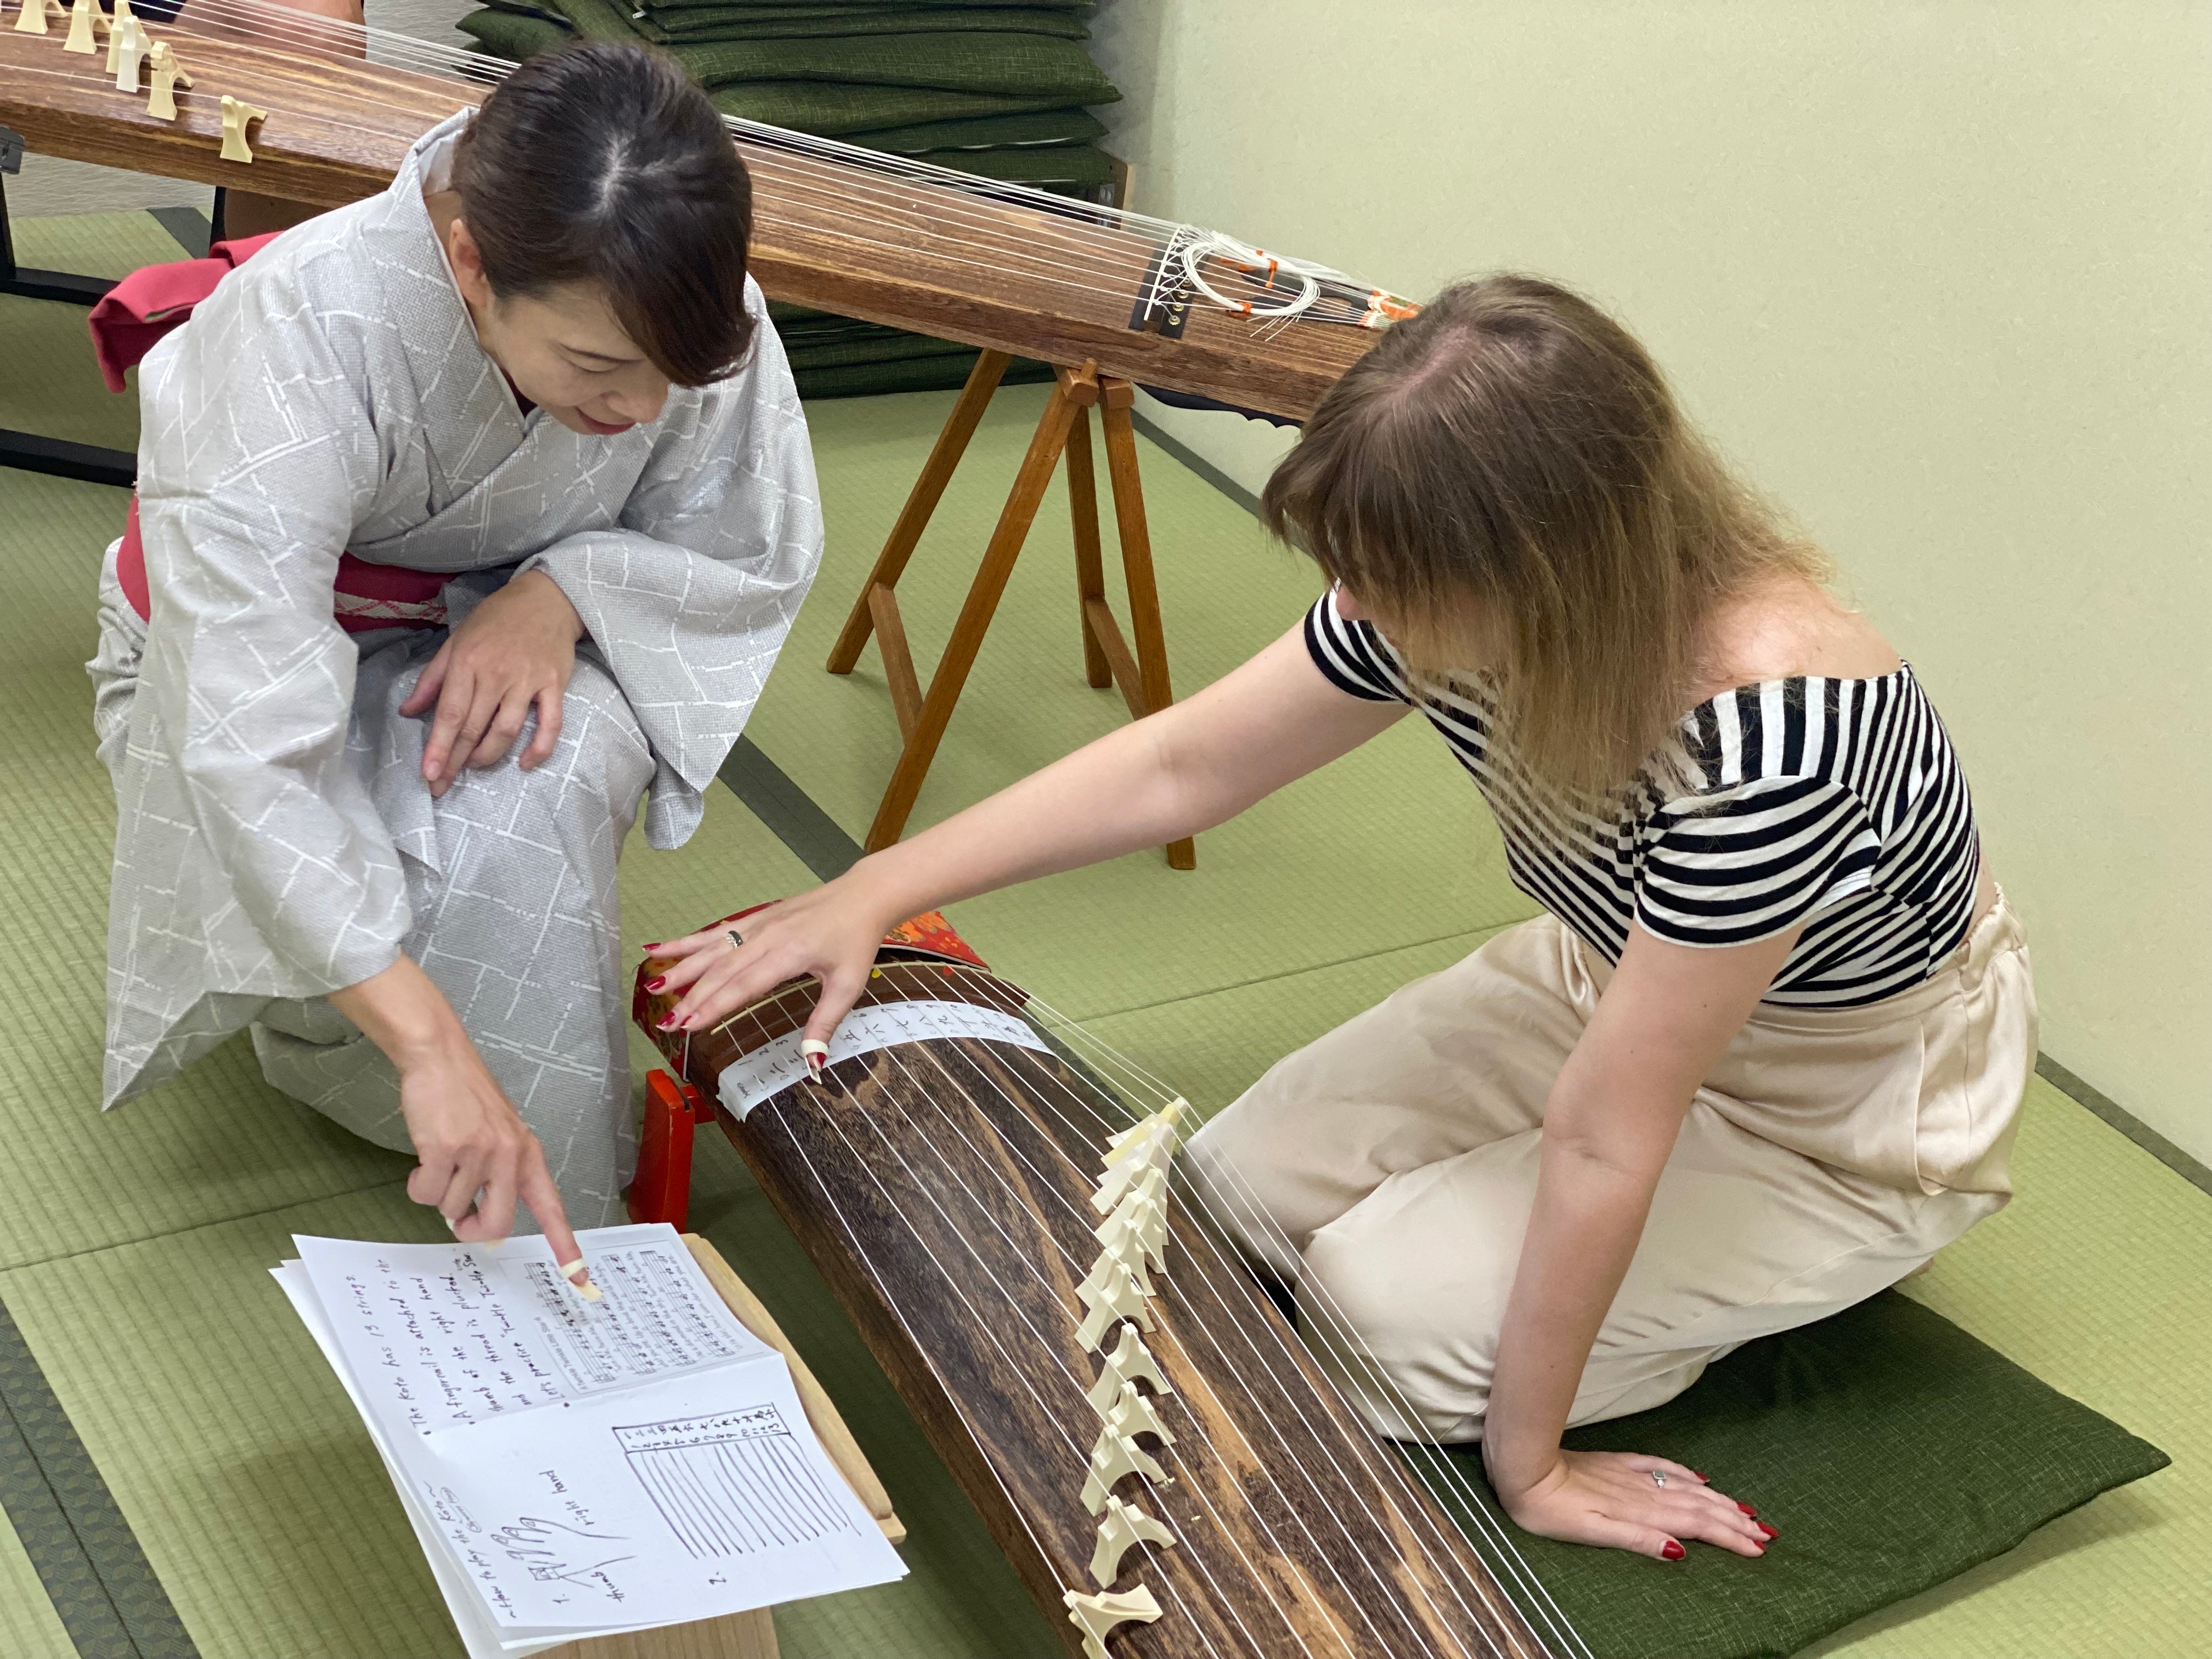 Koto - The Japanese Harp